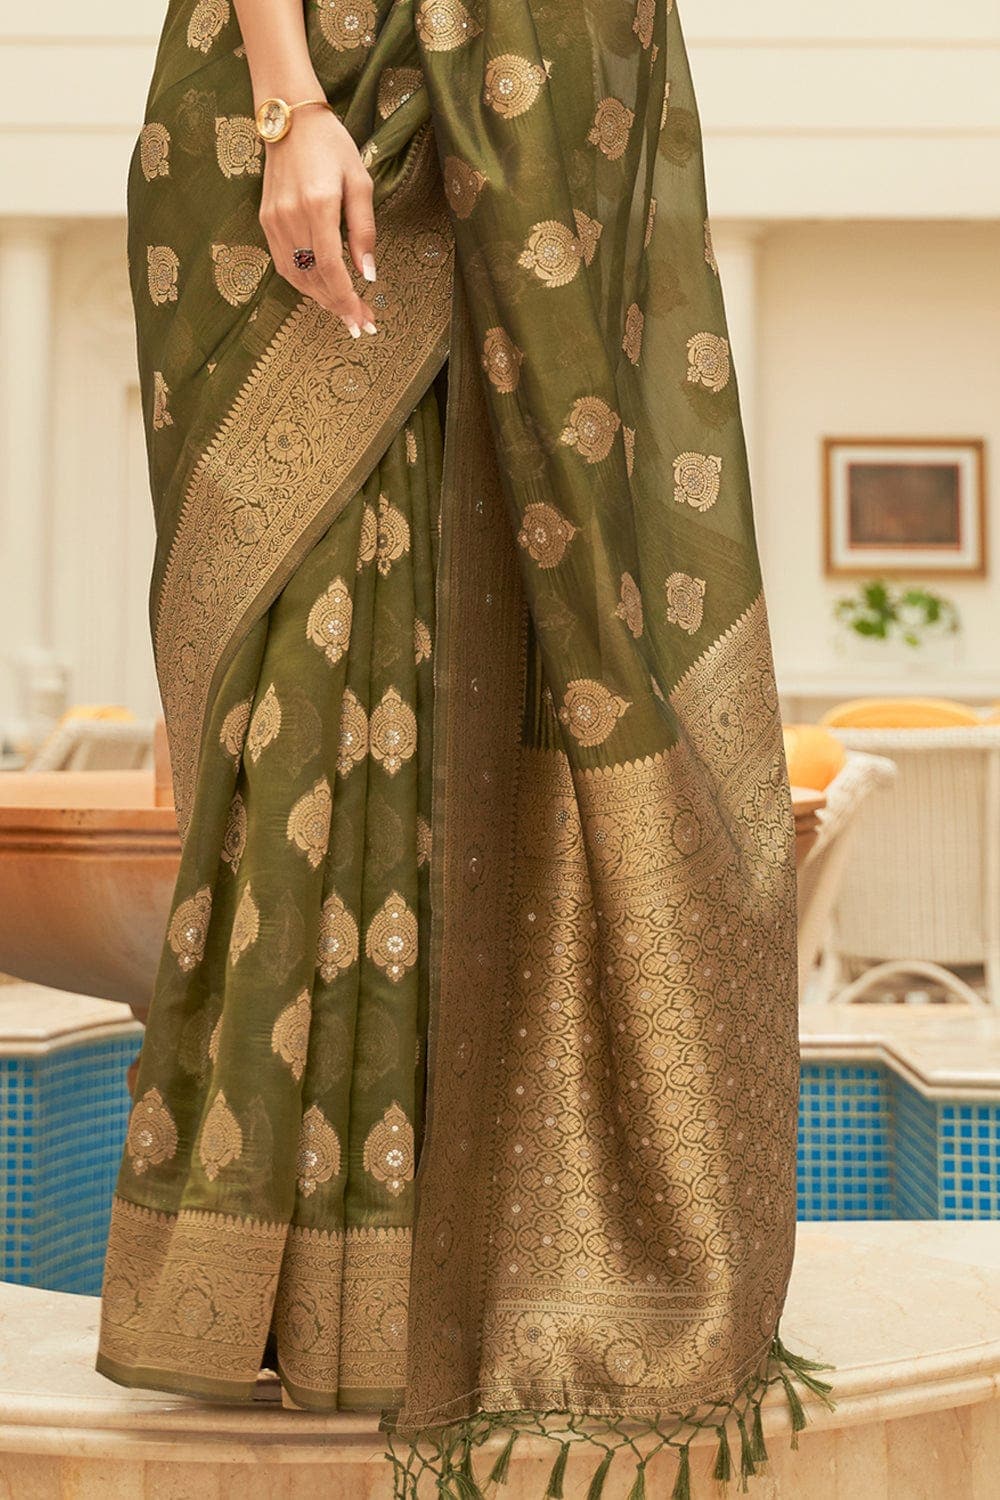 Sea green silk plain saree with designer blouse 5904